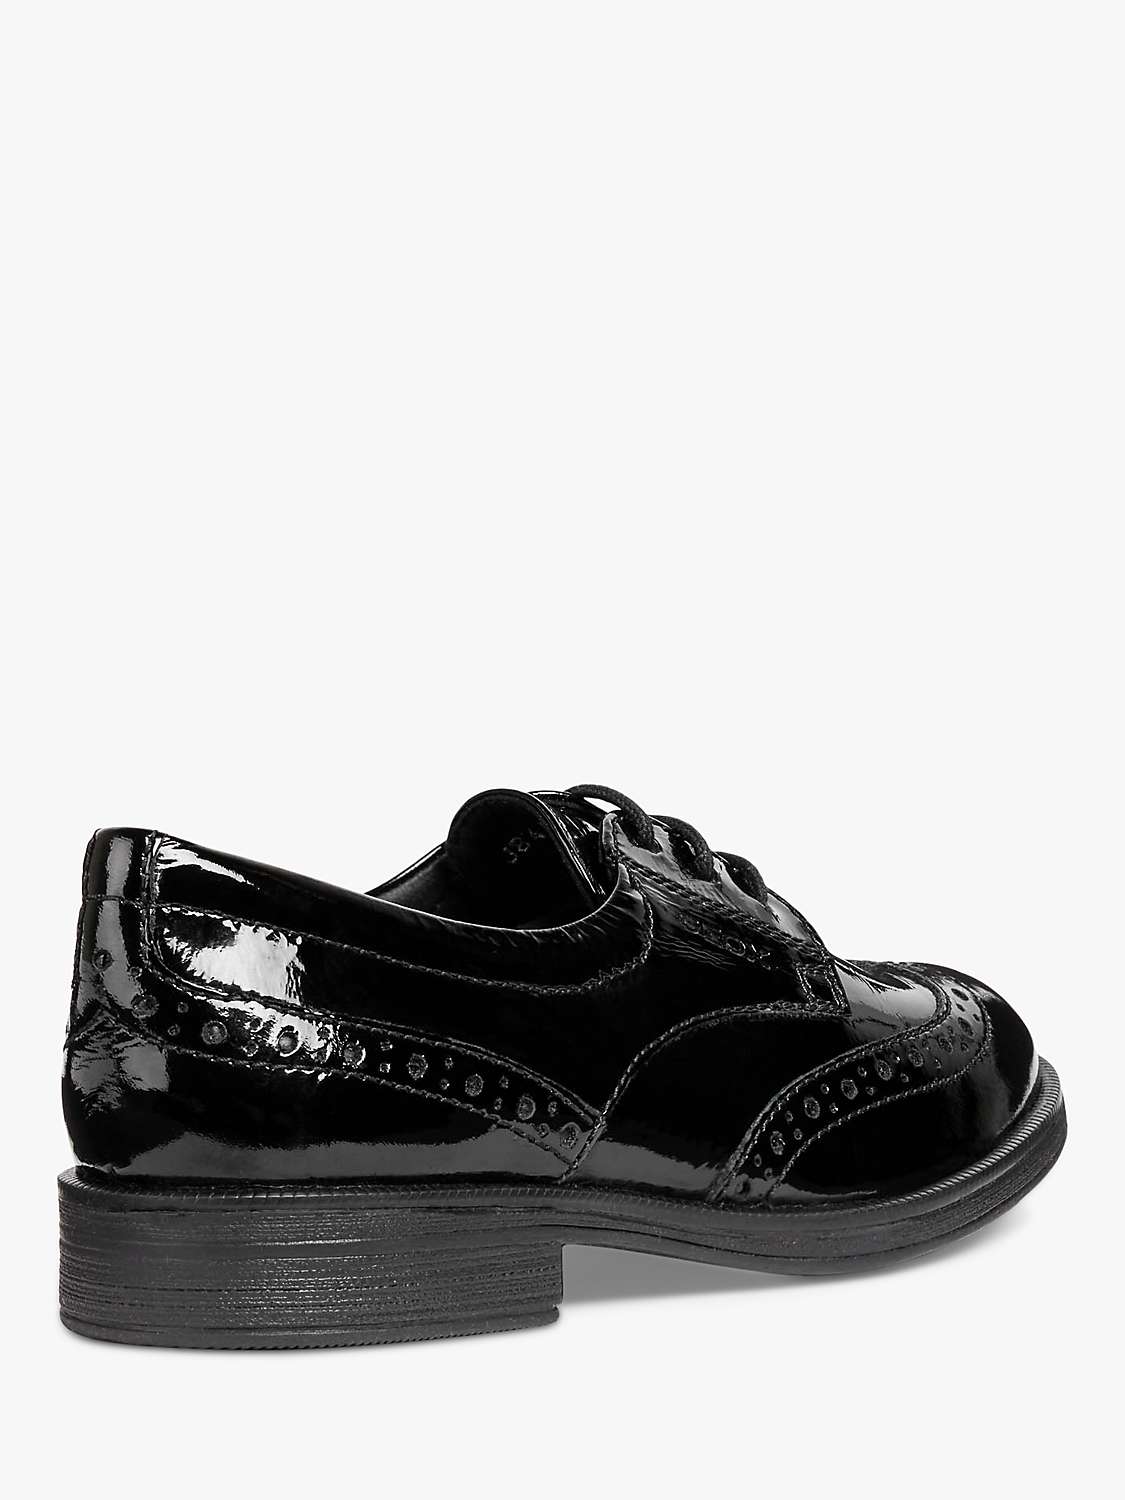 Buy Geox Kids' Agata Lace-Up Brogue School Shoes, Black Online at johnlewis.com